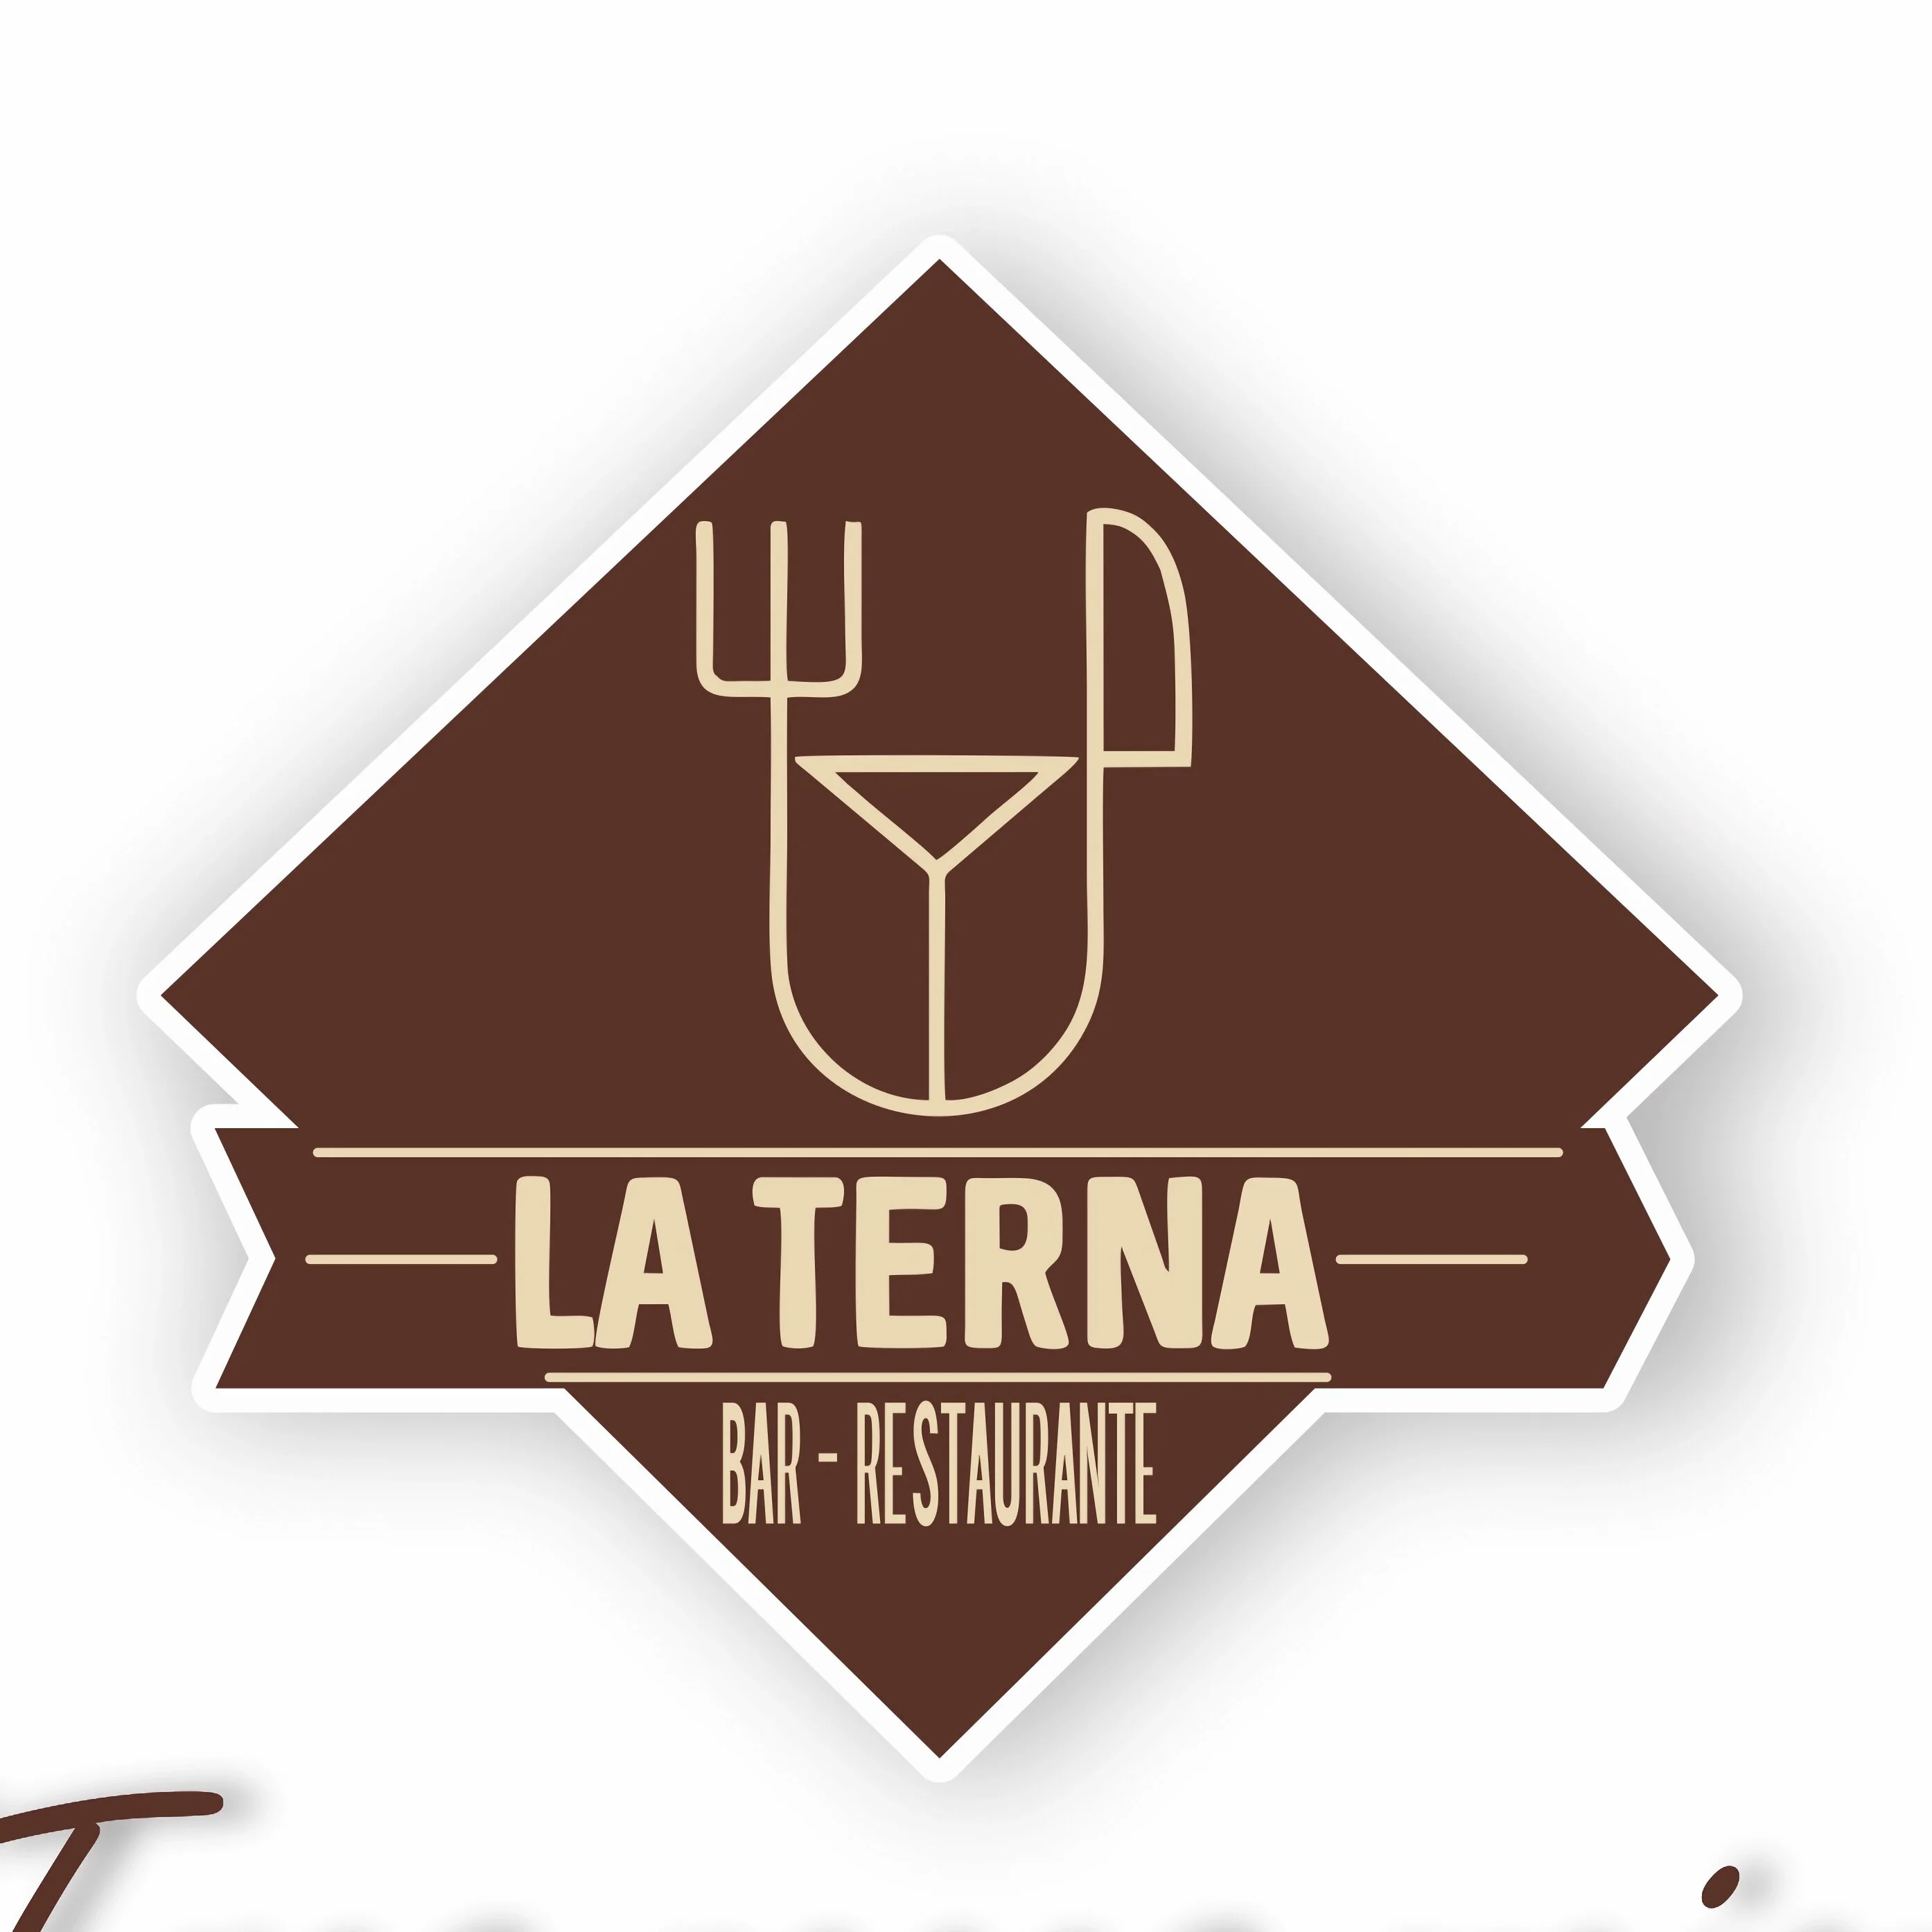 La Terna Restaurante Bar-9967